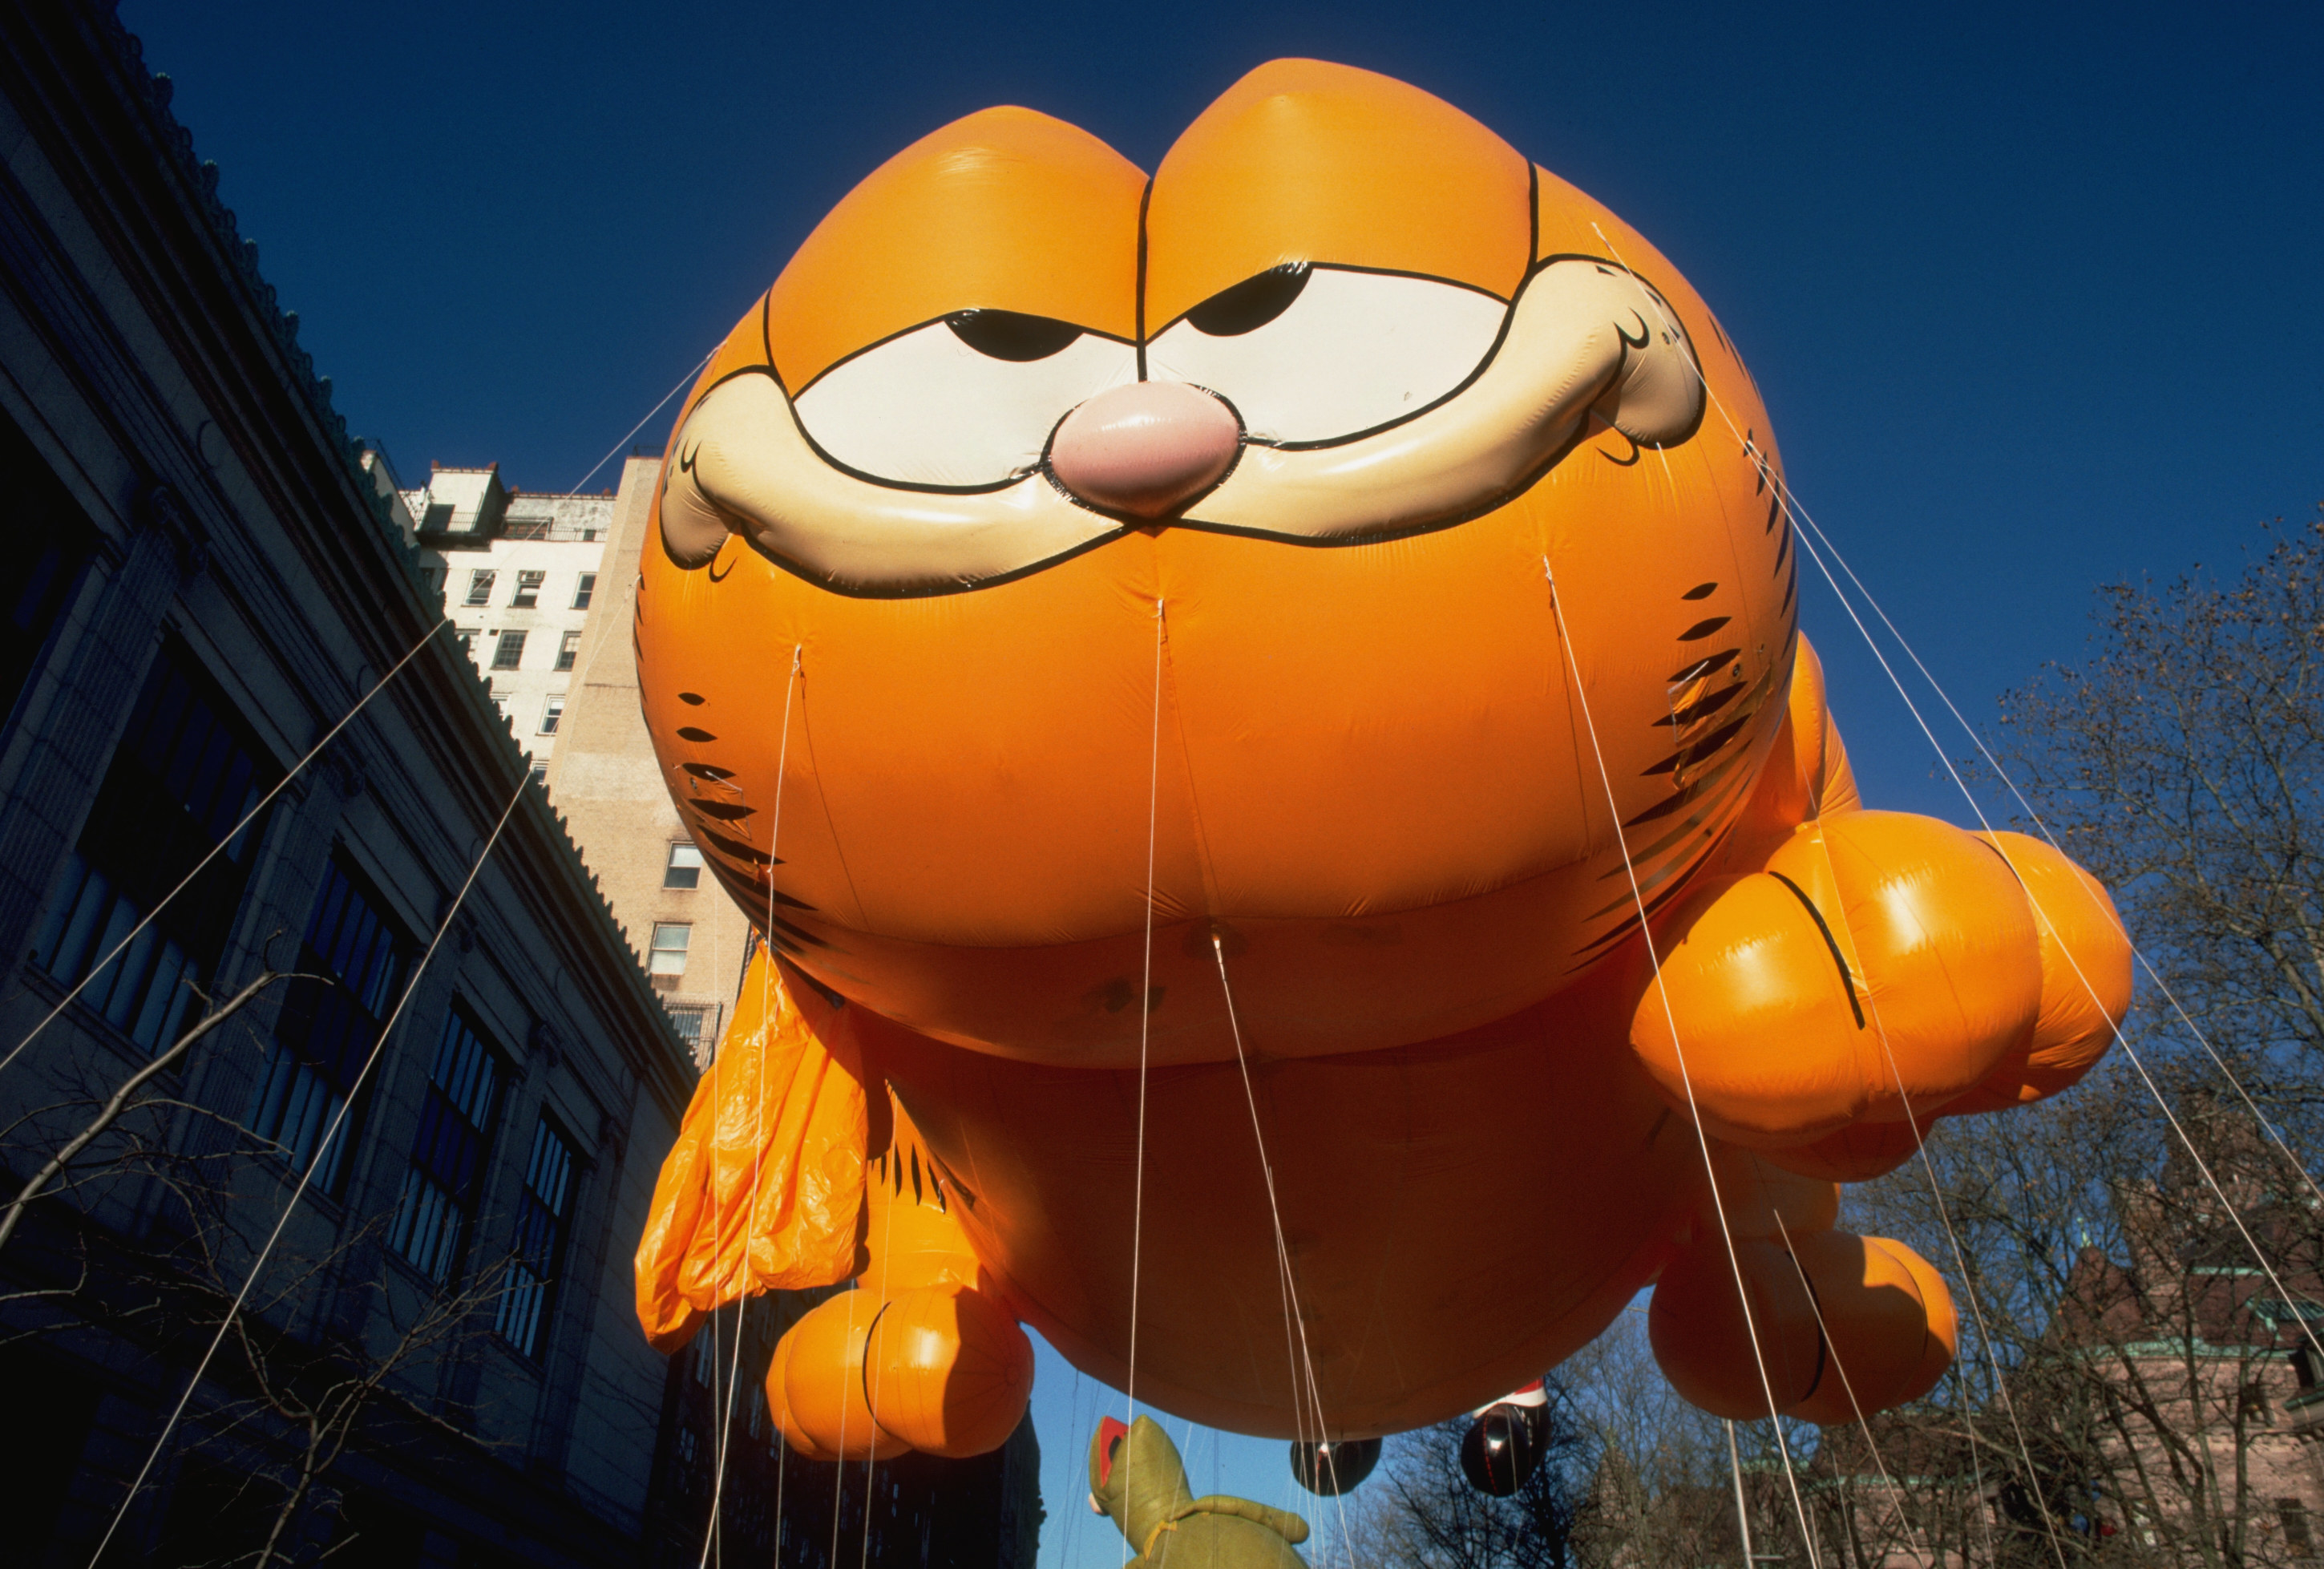 Garfield balloon